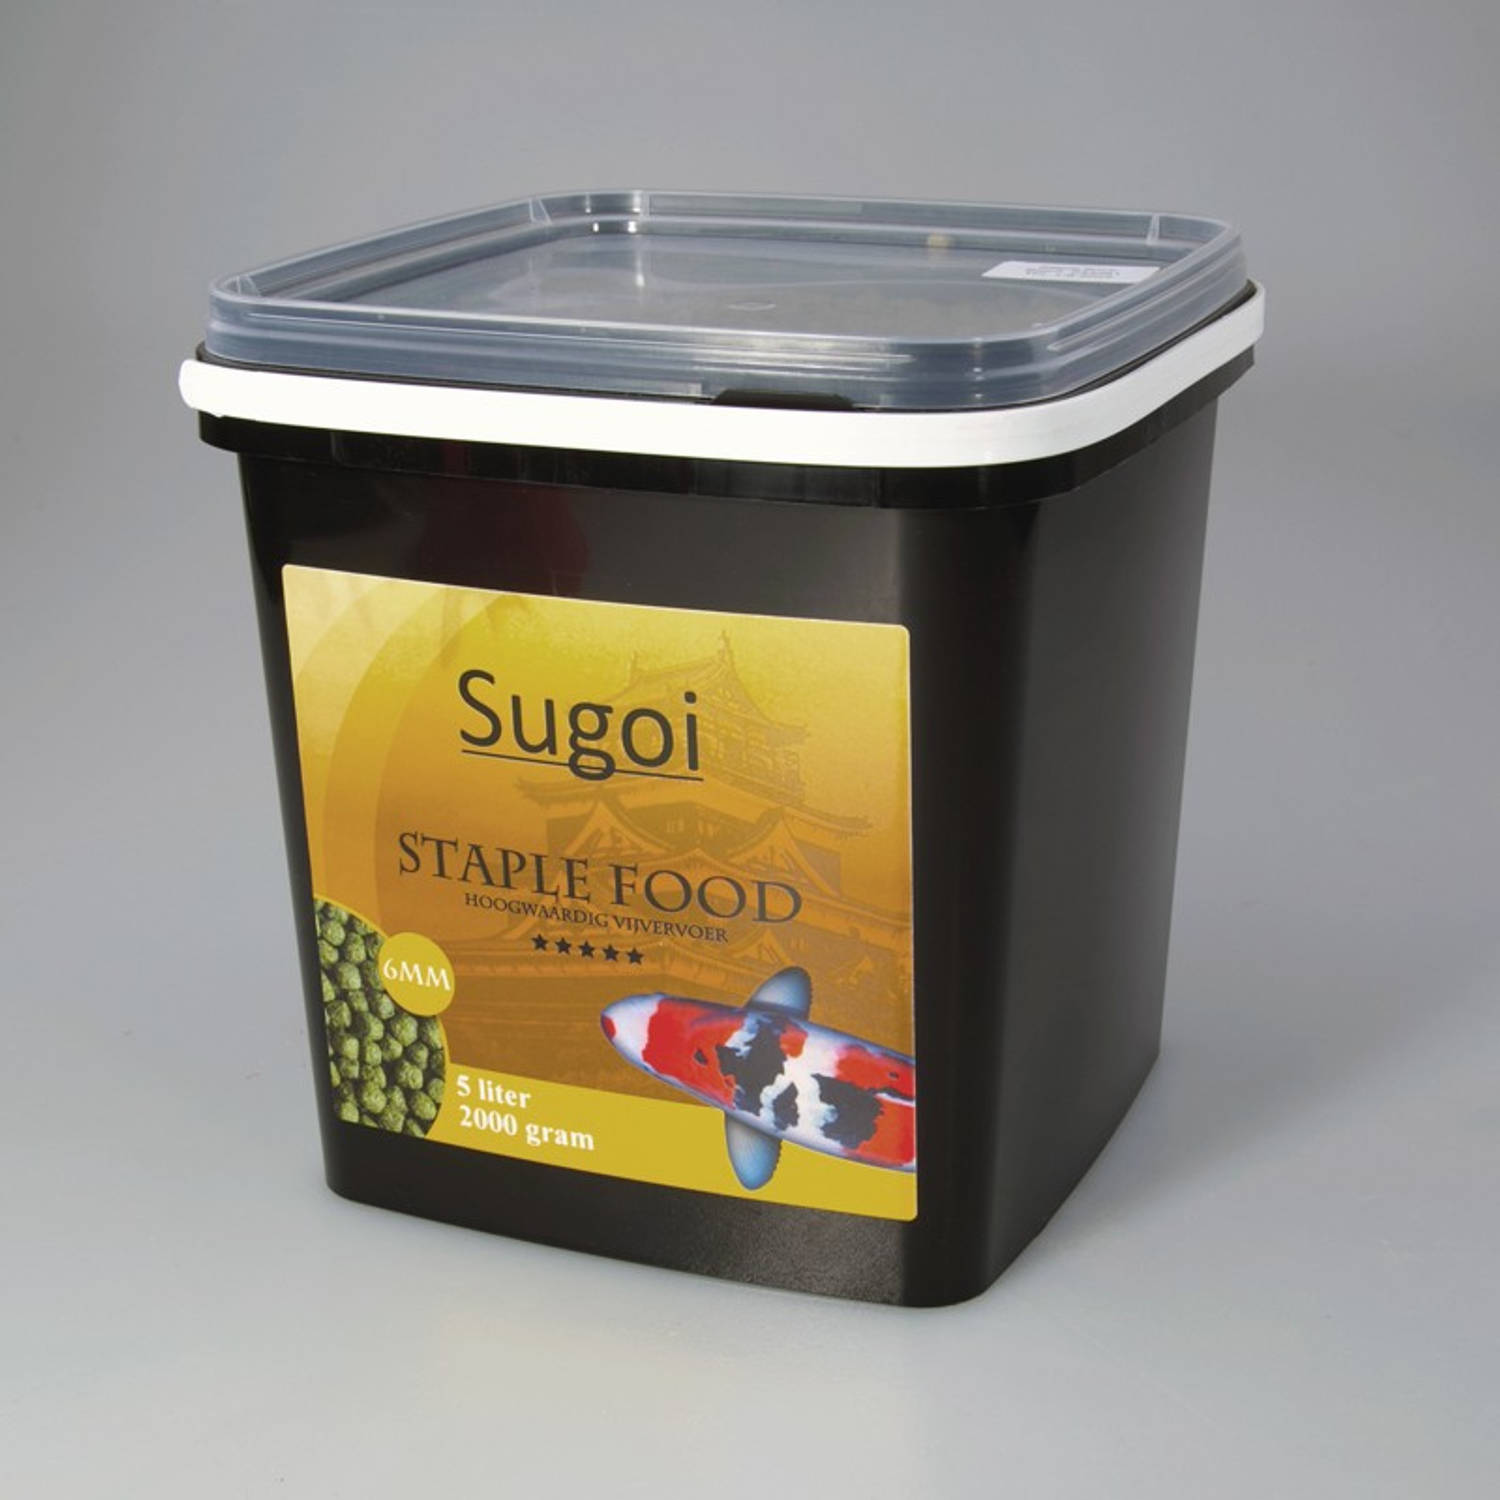 Suren Collection - Sugoi staple food 6 mm 5 liter